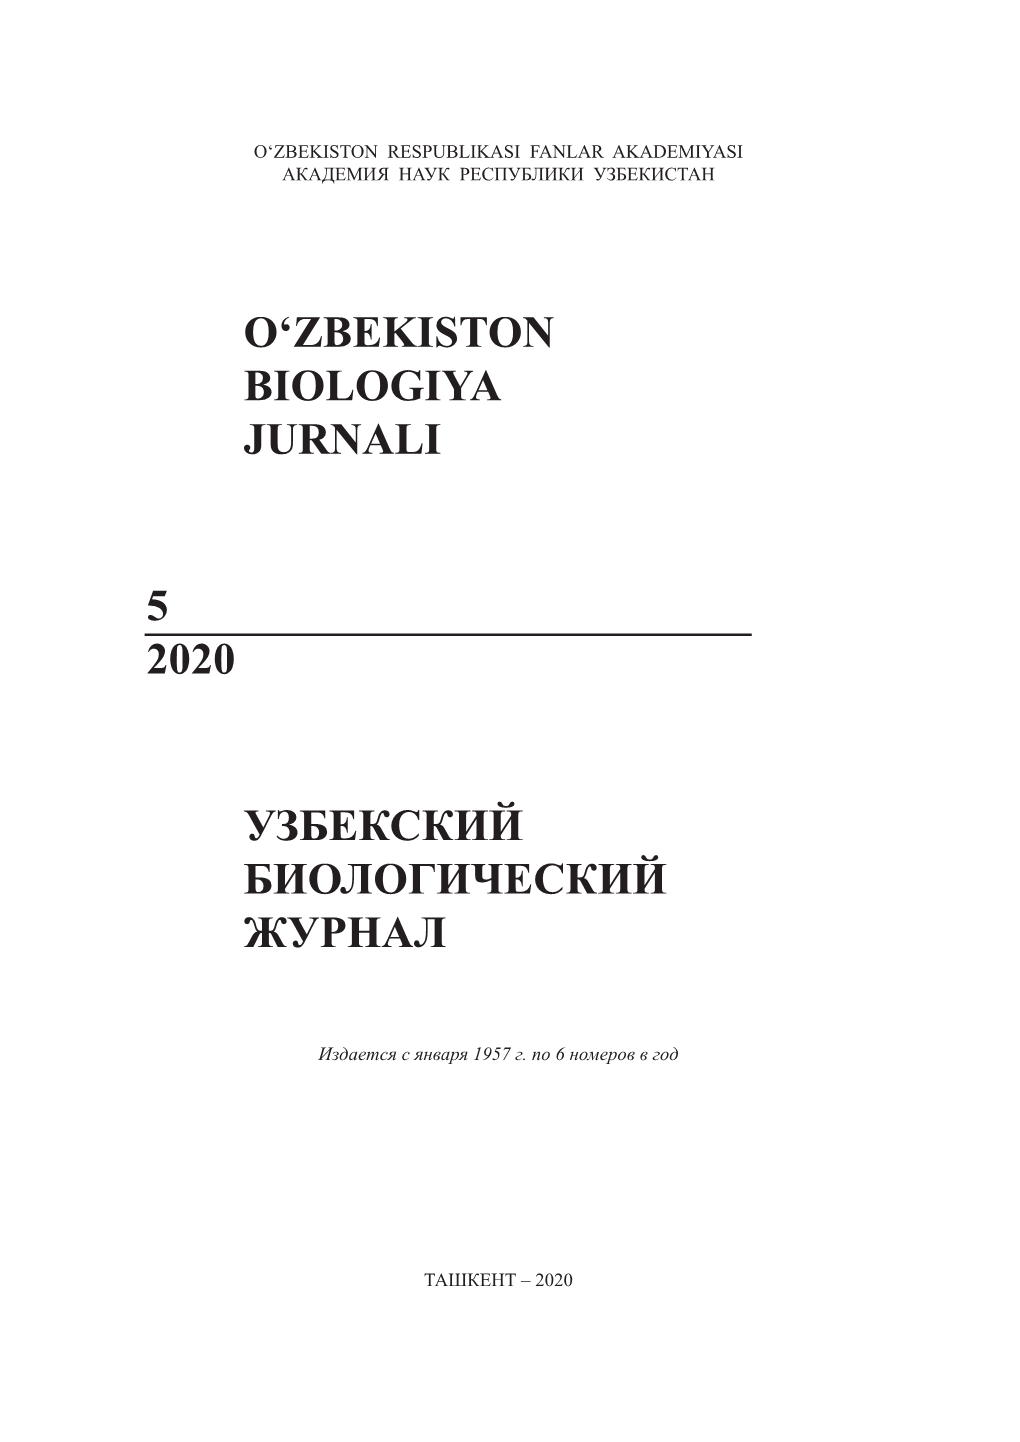 O'zbekiston Biologiya Jurnali 5 2020 Узбекский